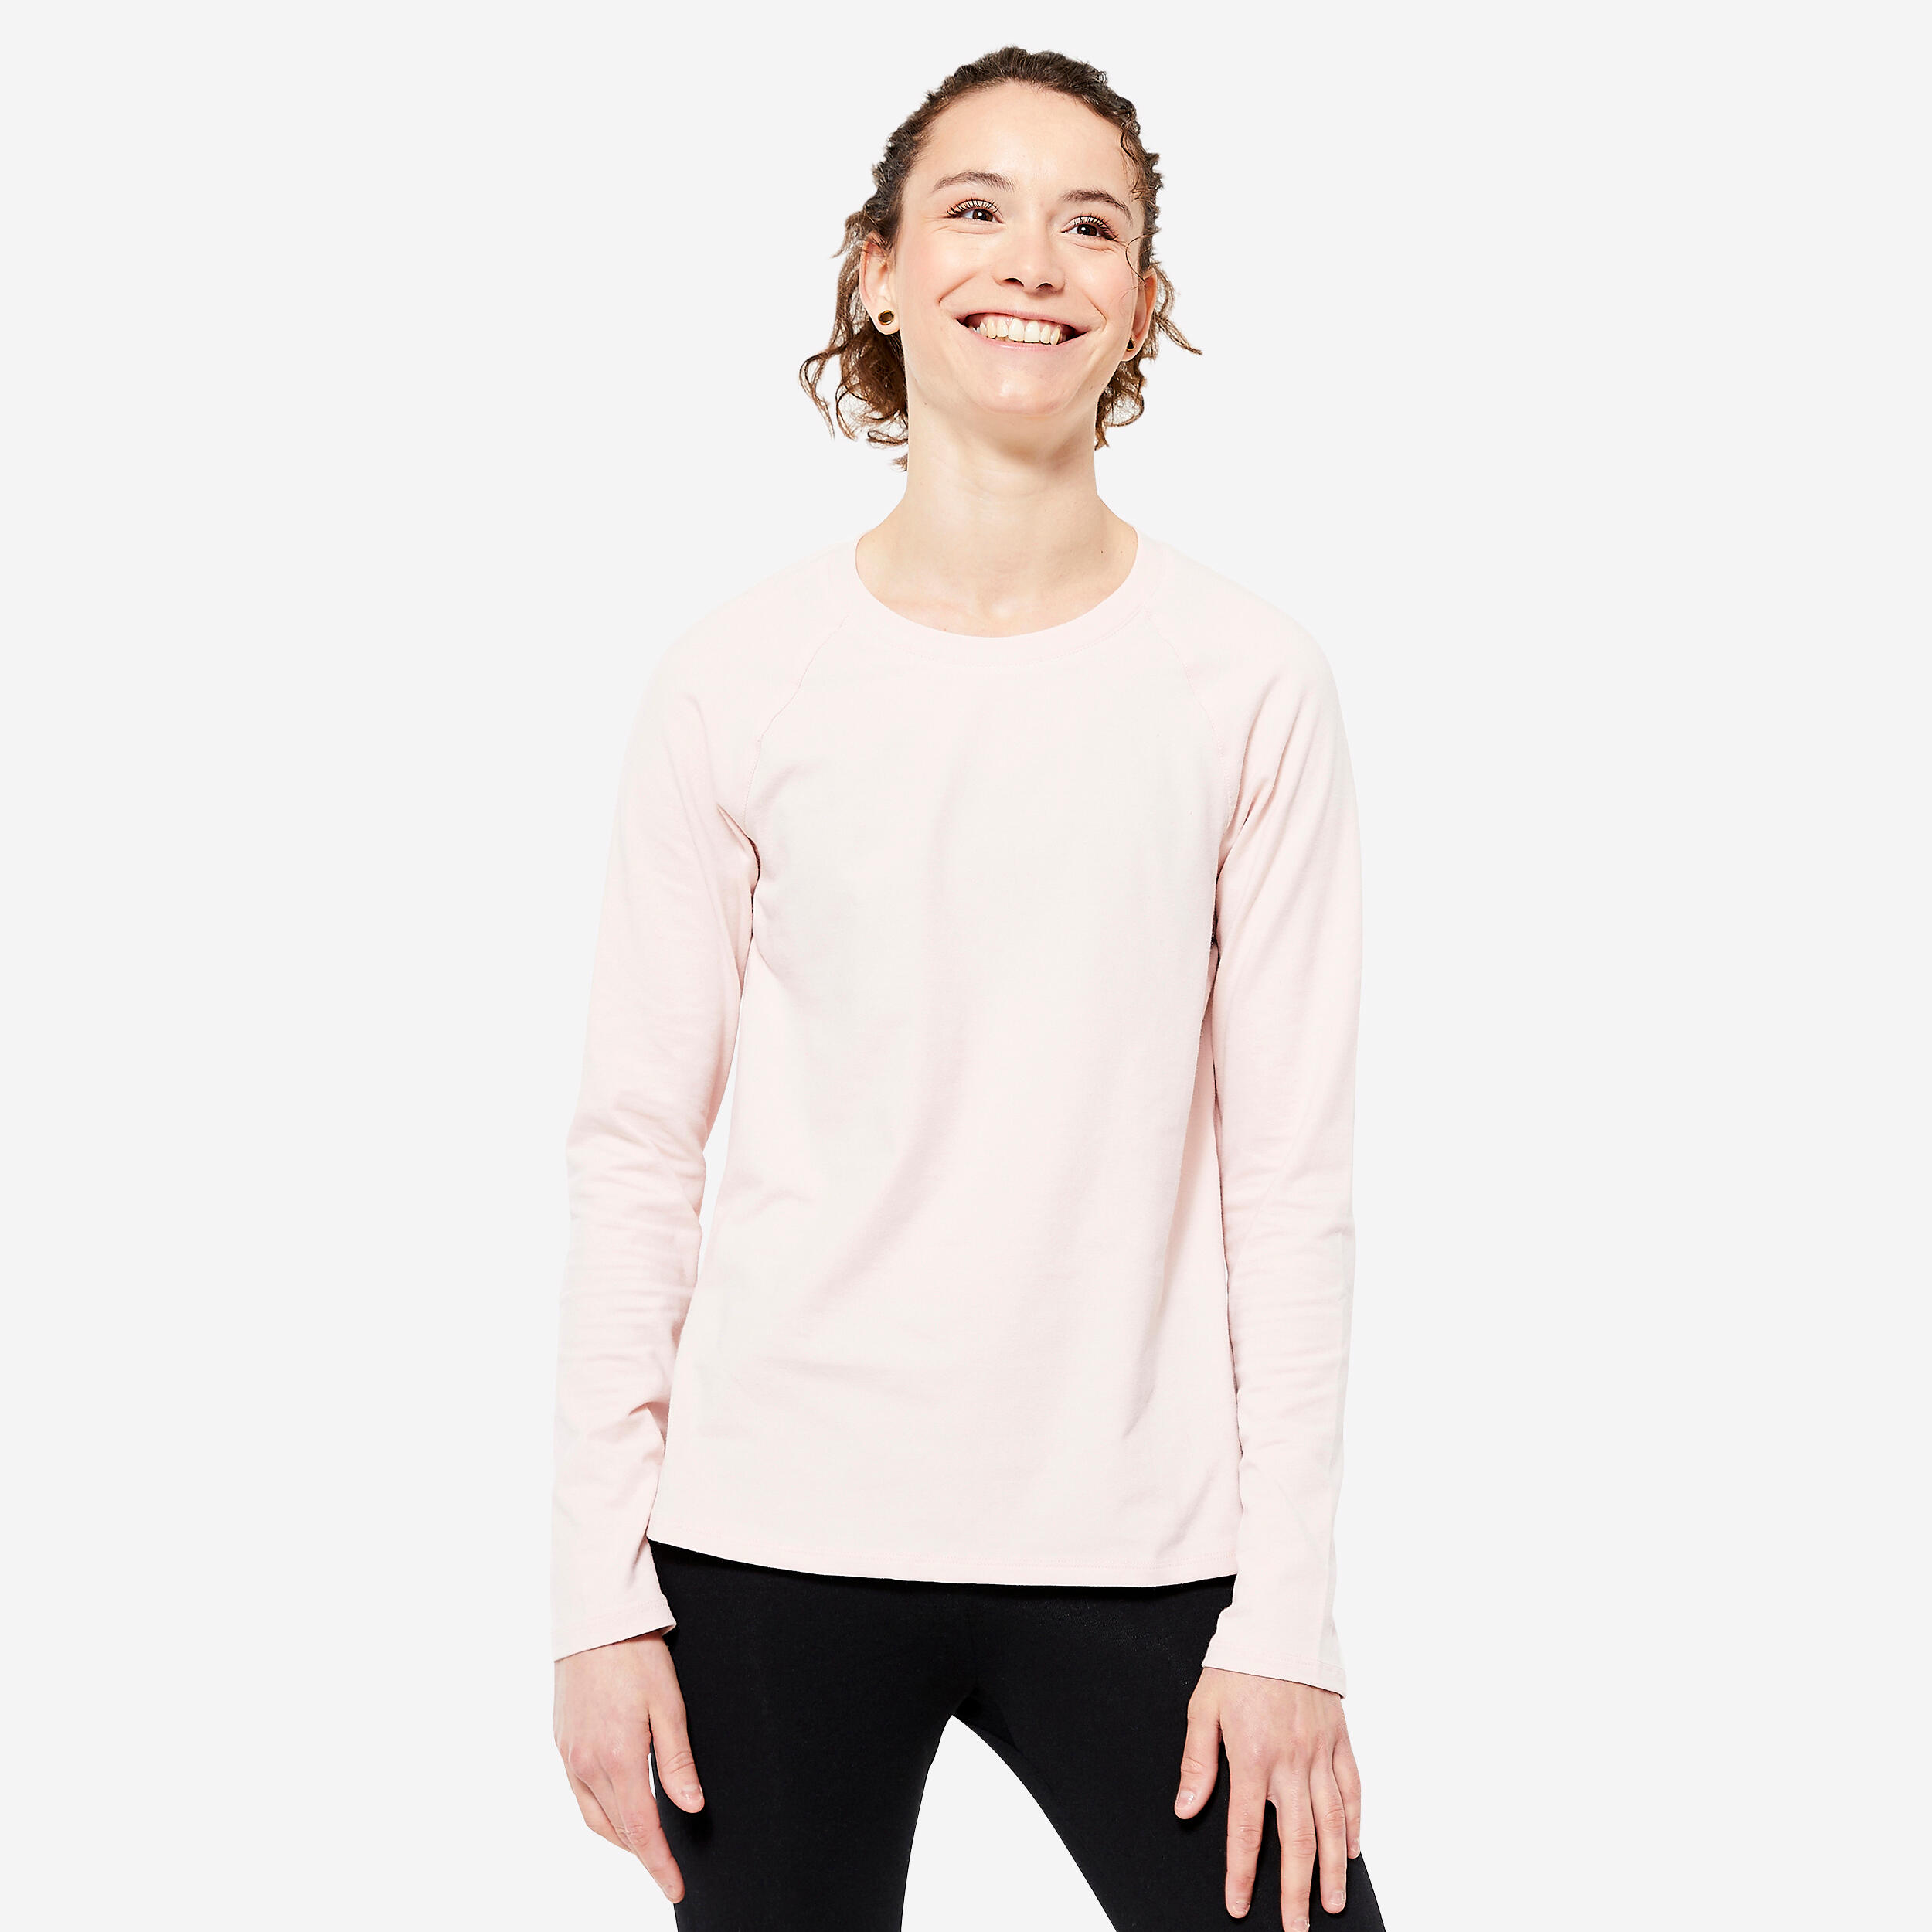 Women's Long-Sleeved Fitness T-Shirt 500 - Pink 1/6